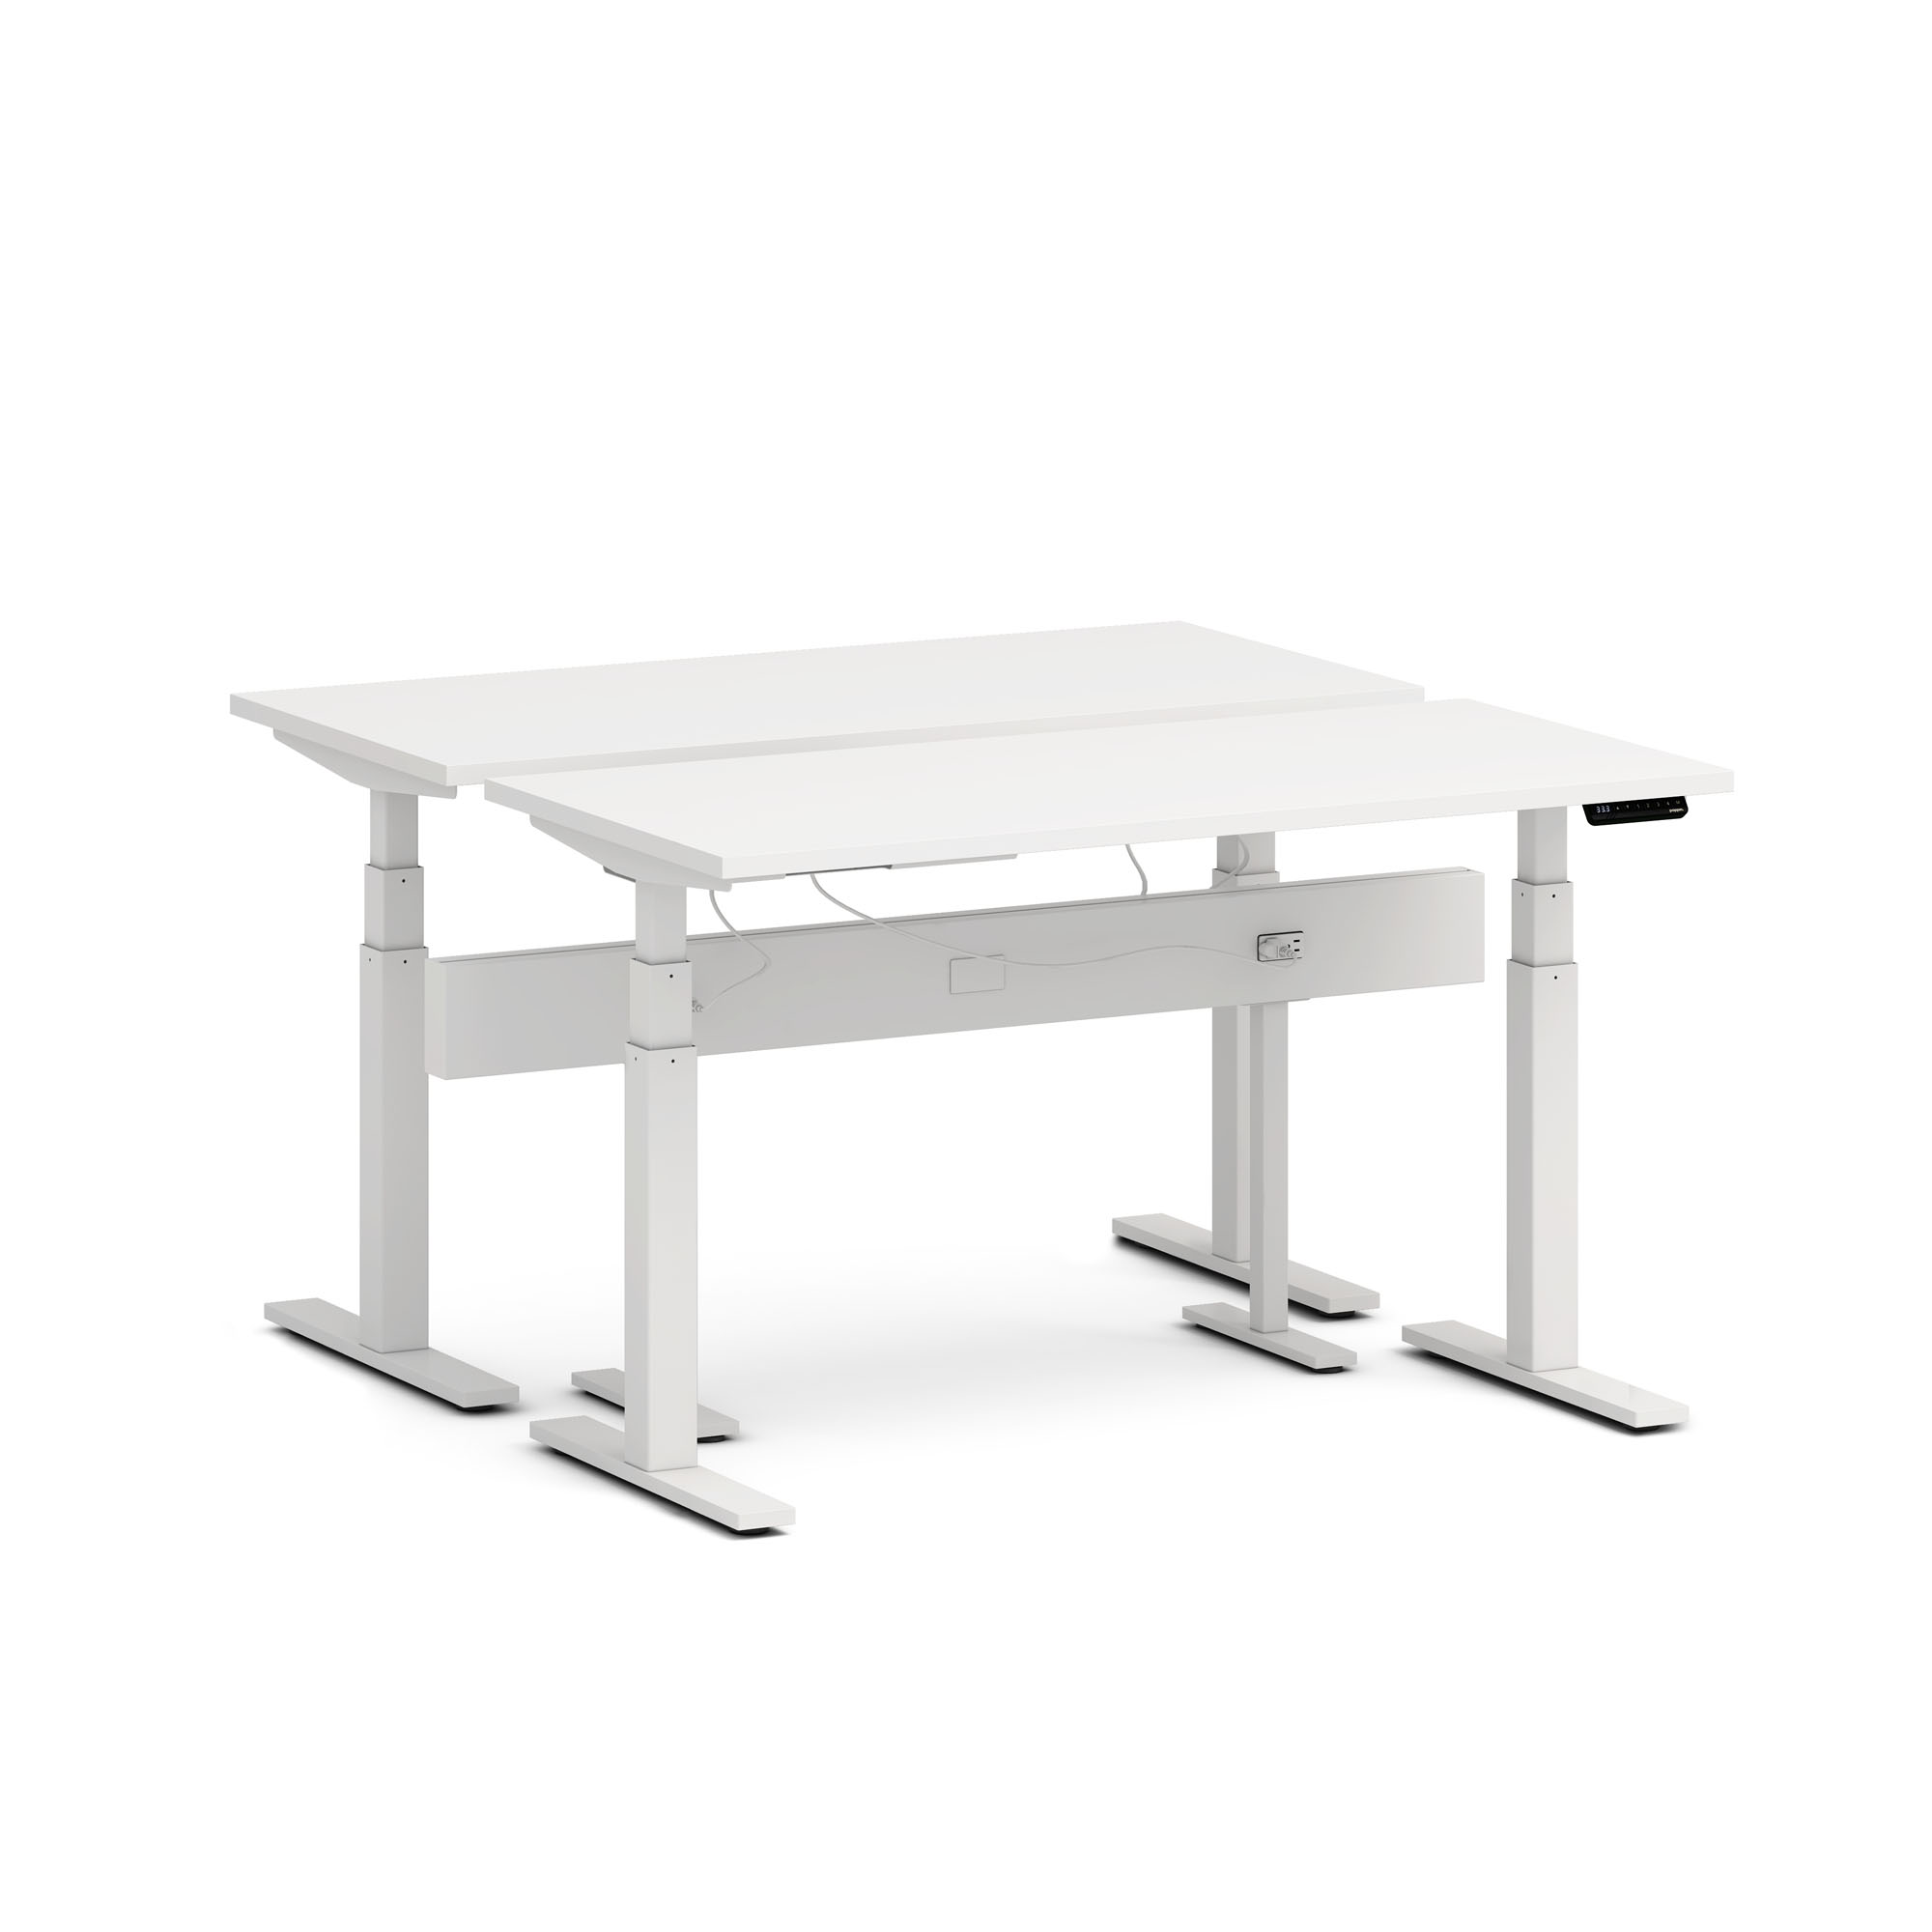 Series L Desk for 2 + Boom Power Rail, White Legs